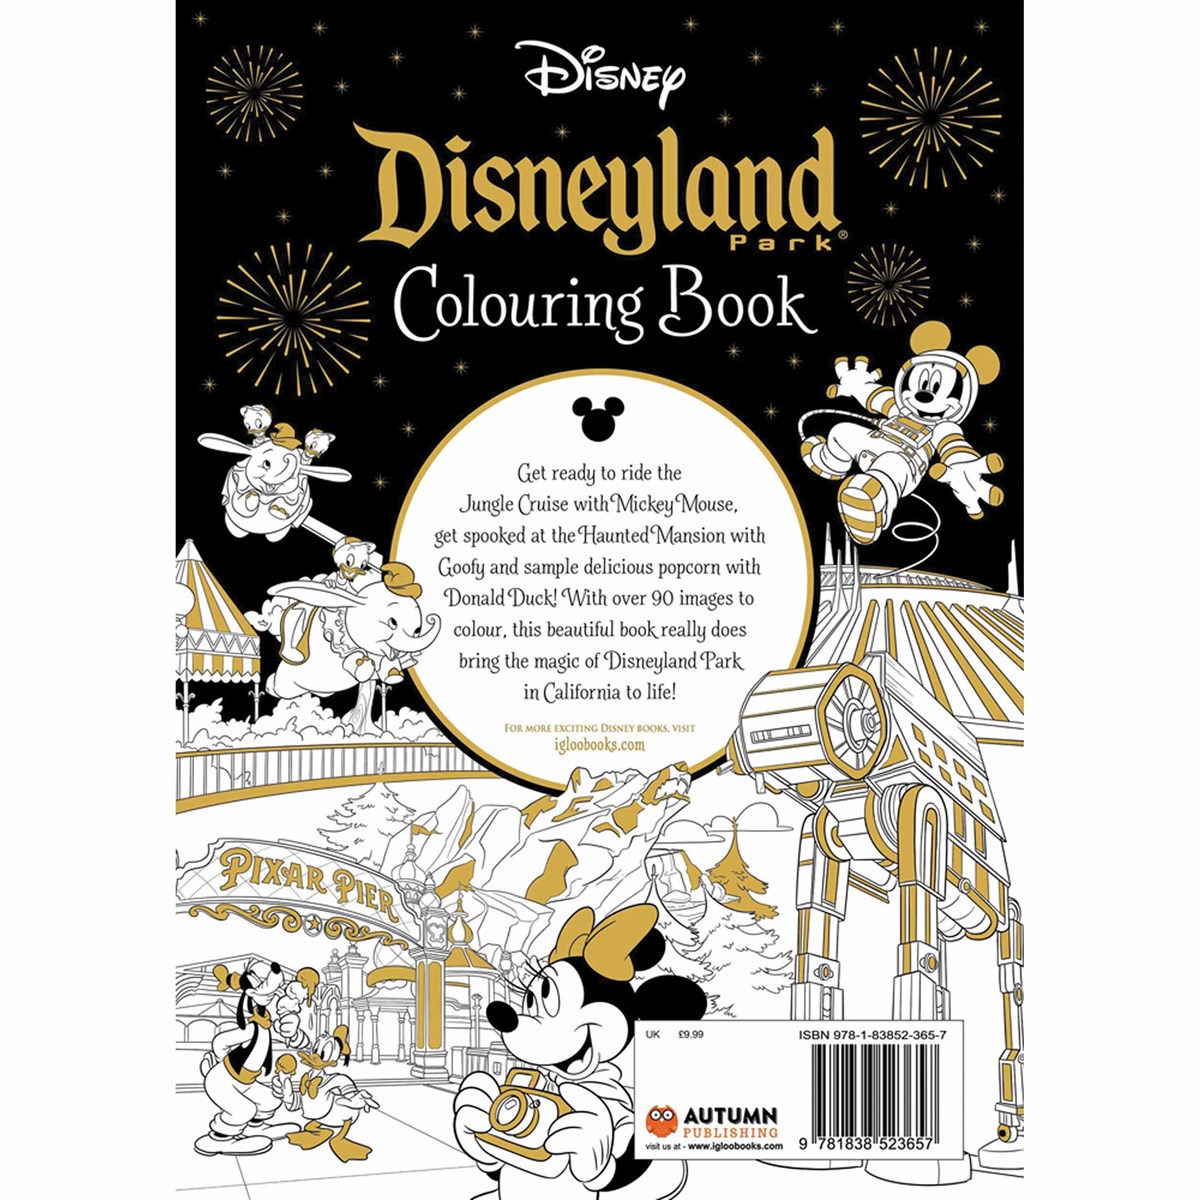 Disney, Disneyland Colouring Book